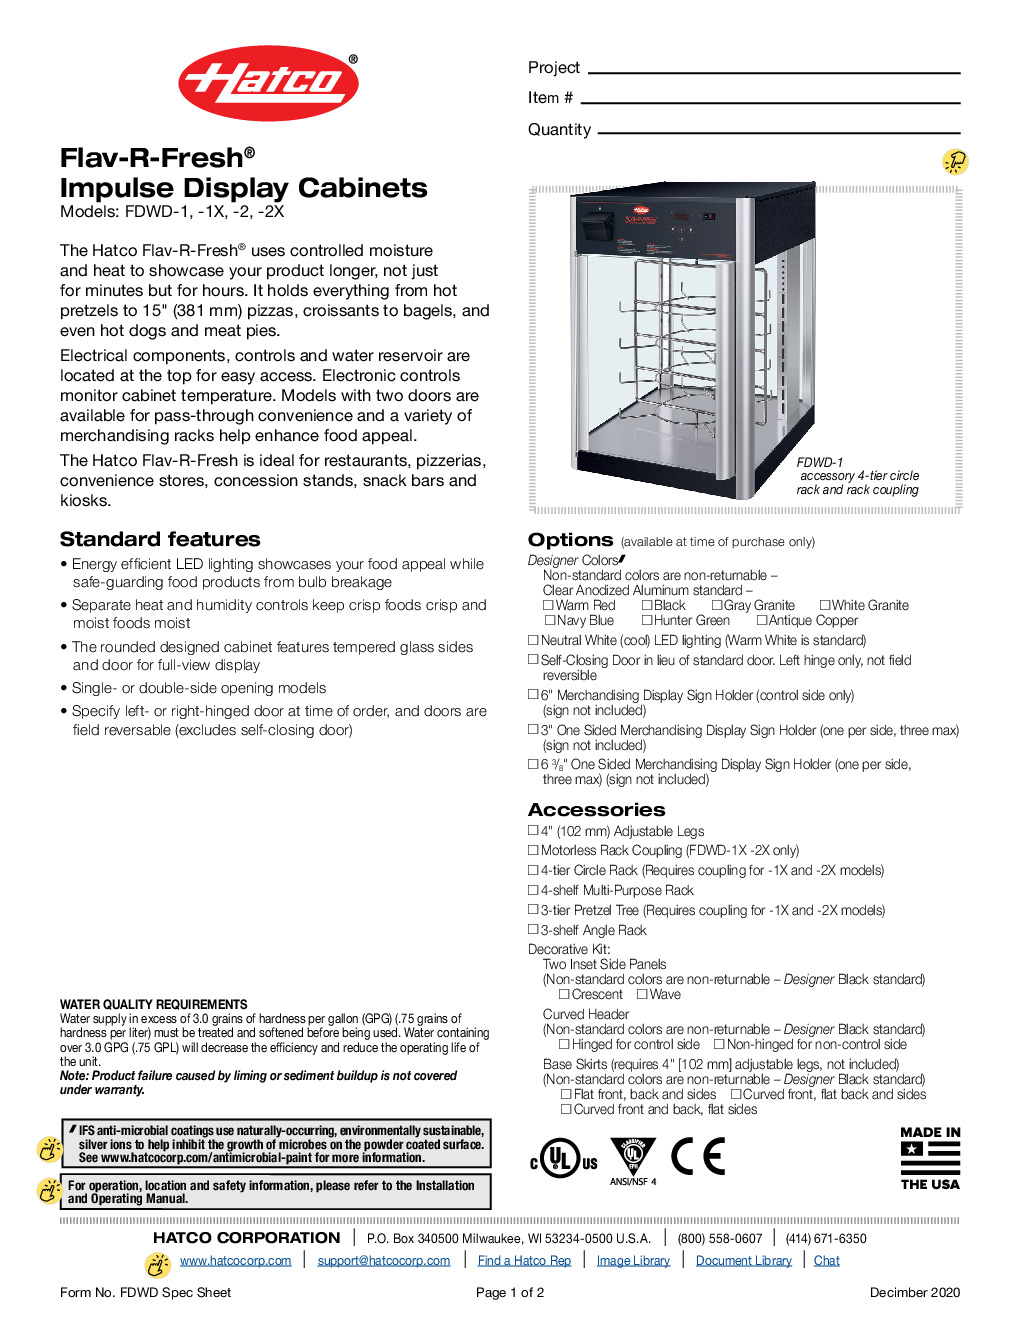 Hatco FDWD-2-120-QS Countertop Hot Food Display Case